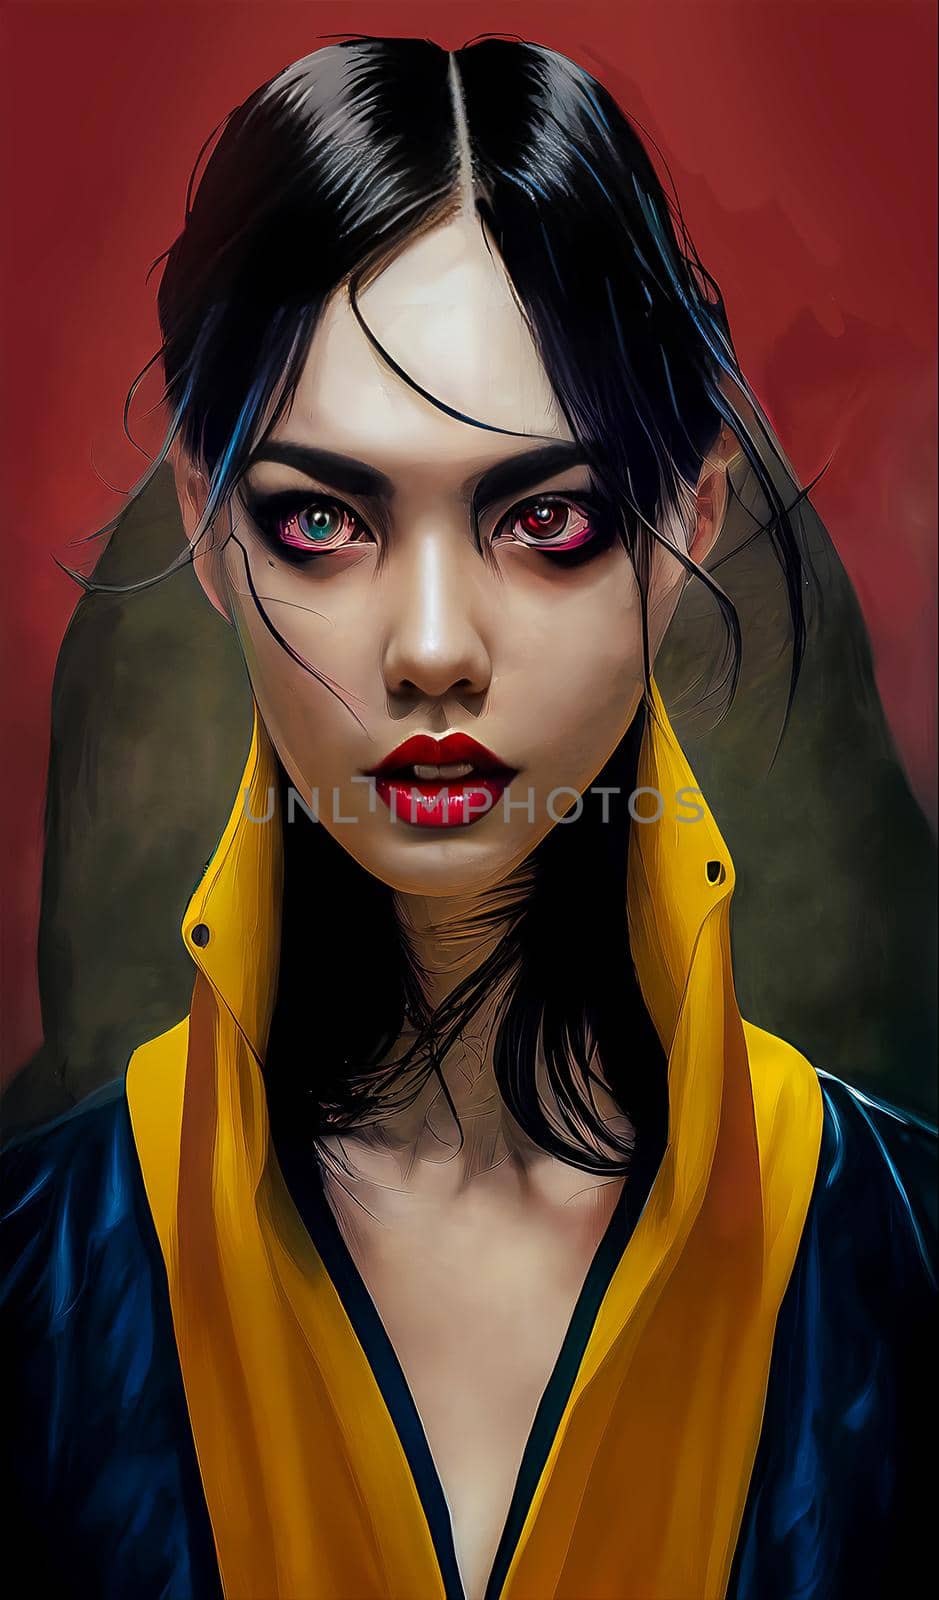 Scary fashion model illustration. Brunette girl in jacket. Digital illustration by vmalafeevskiy